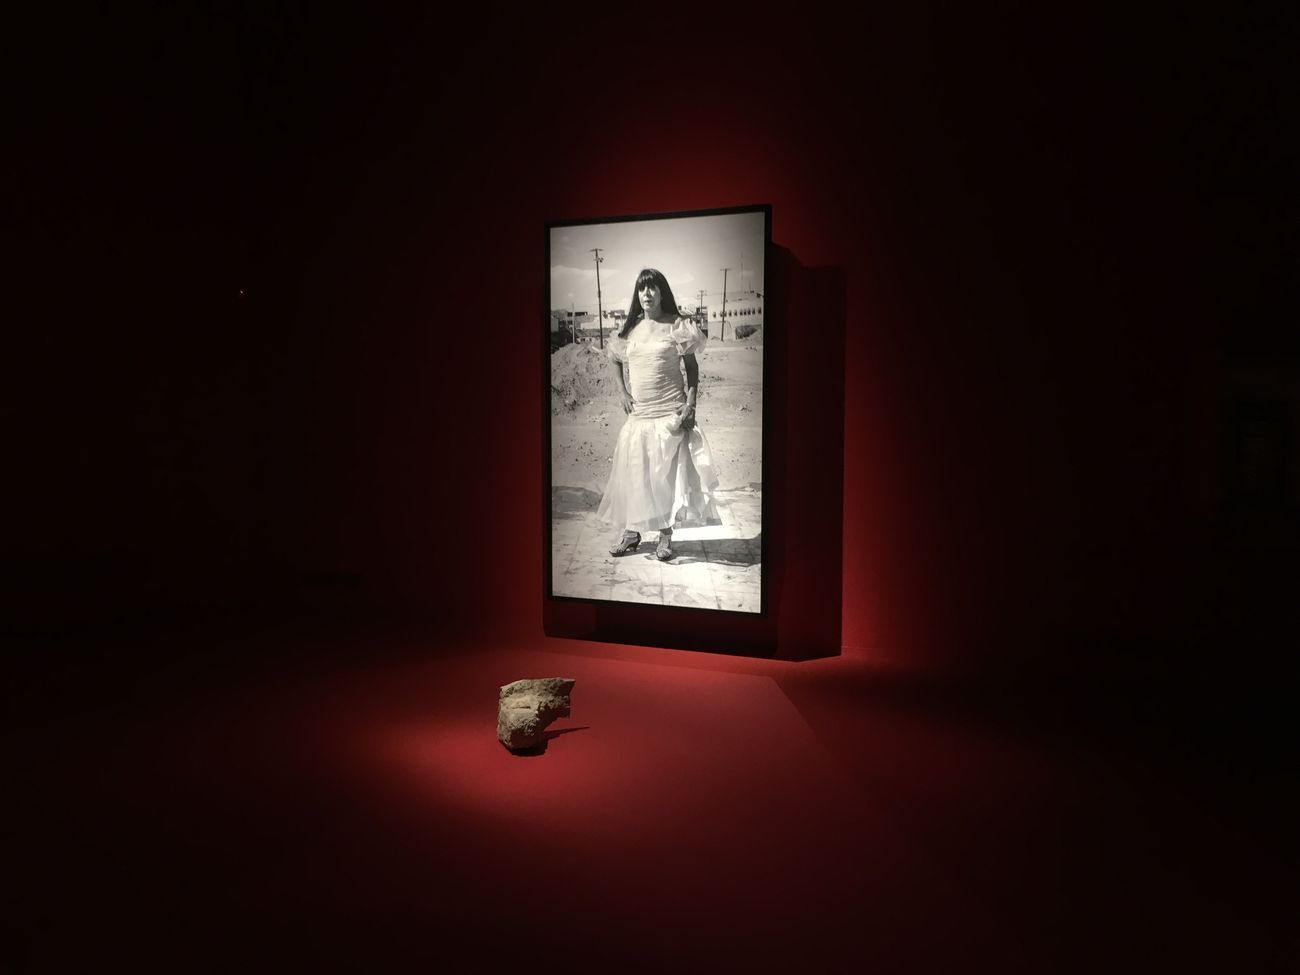 Teresa Margolles. Ya basta hijos de puta. Exhibition view at PAC, Milano 2018